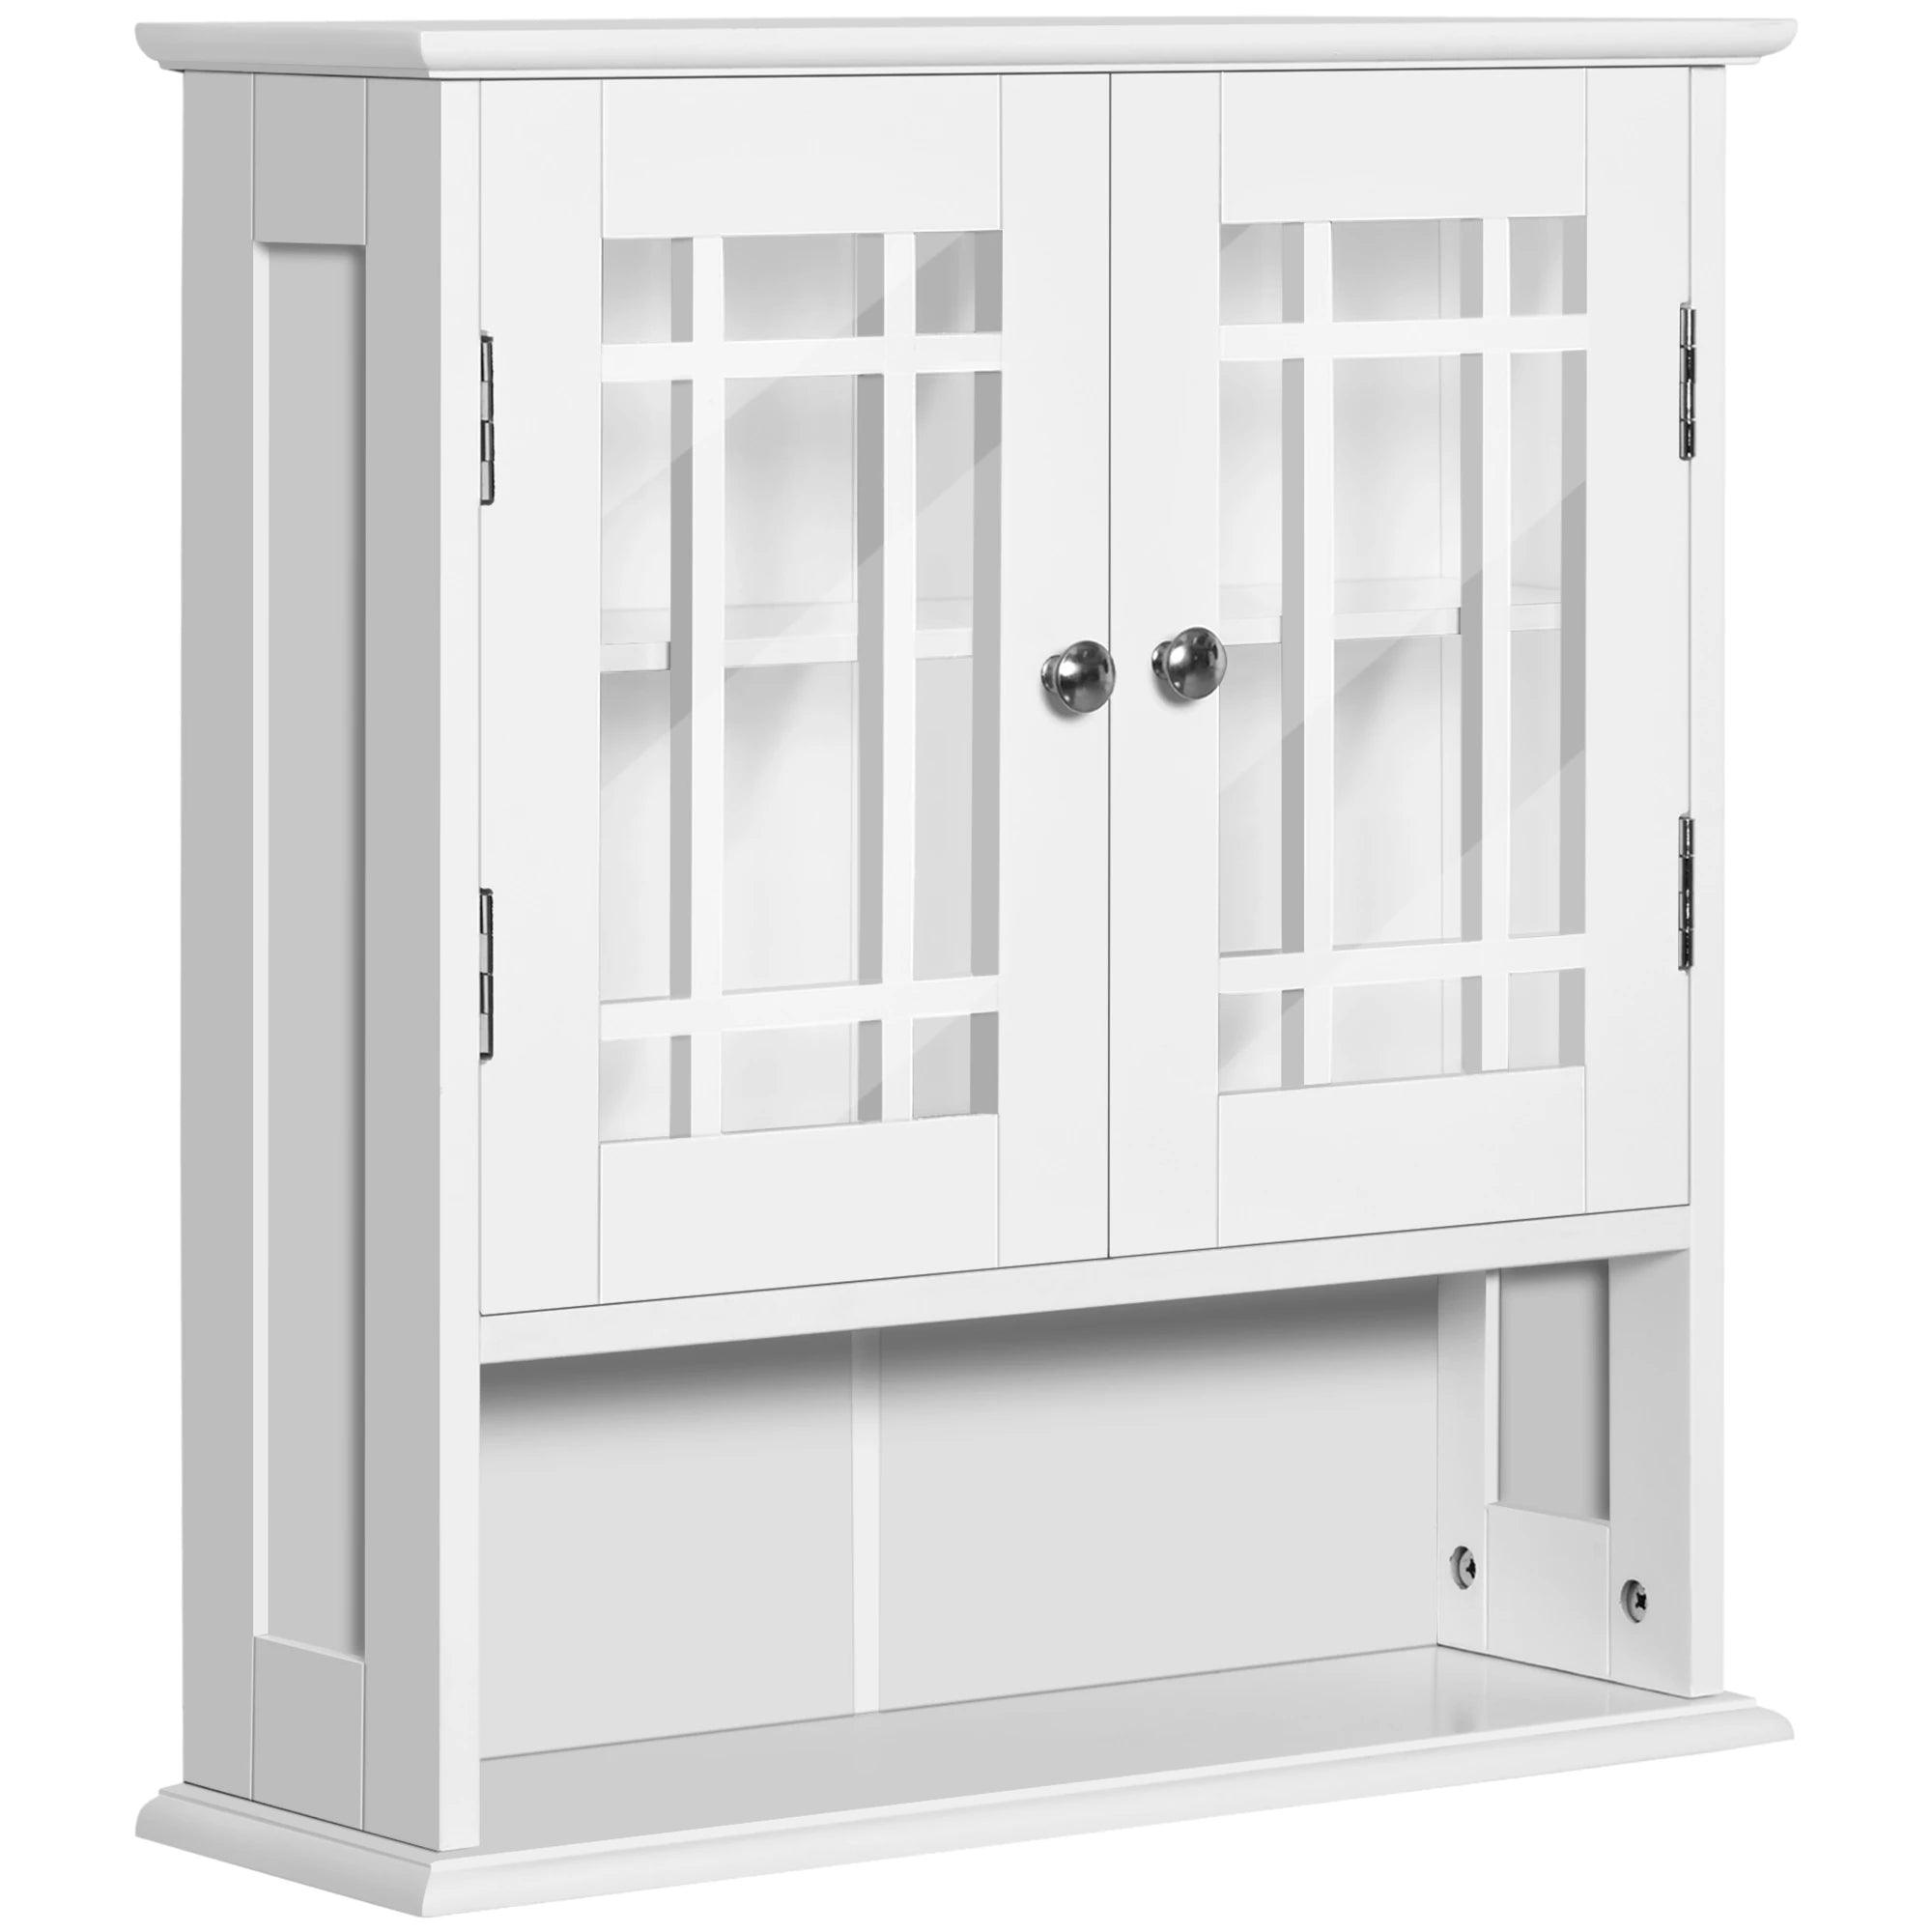 Modern Wall Mount Bathroom Cabinet, Storage Organizer with 2 Door Cabinet and Open Shelf, White